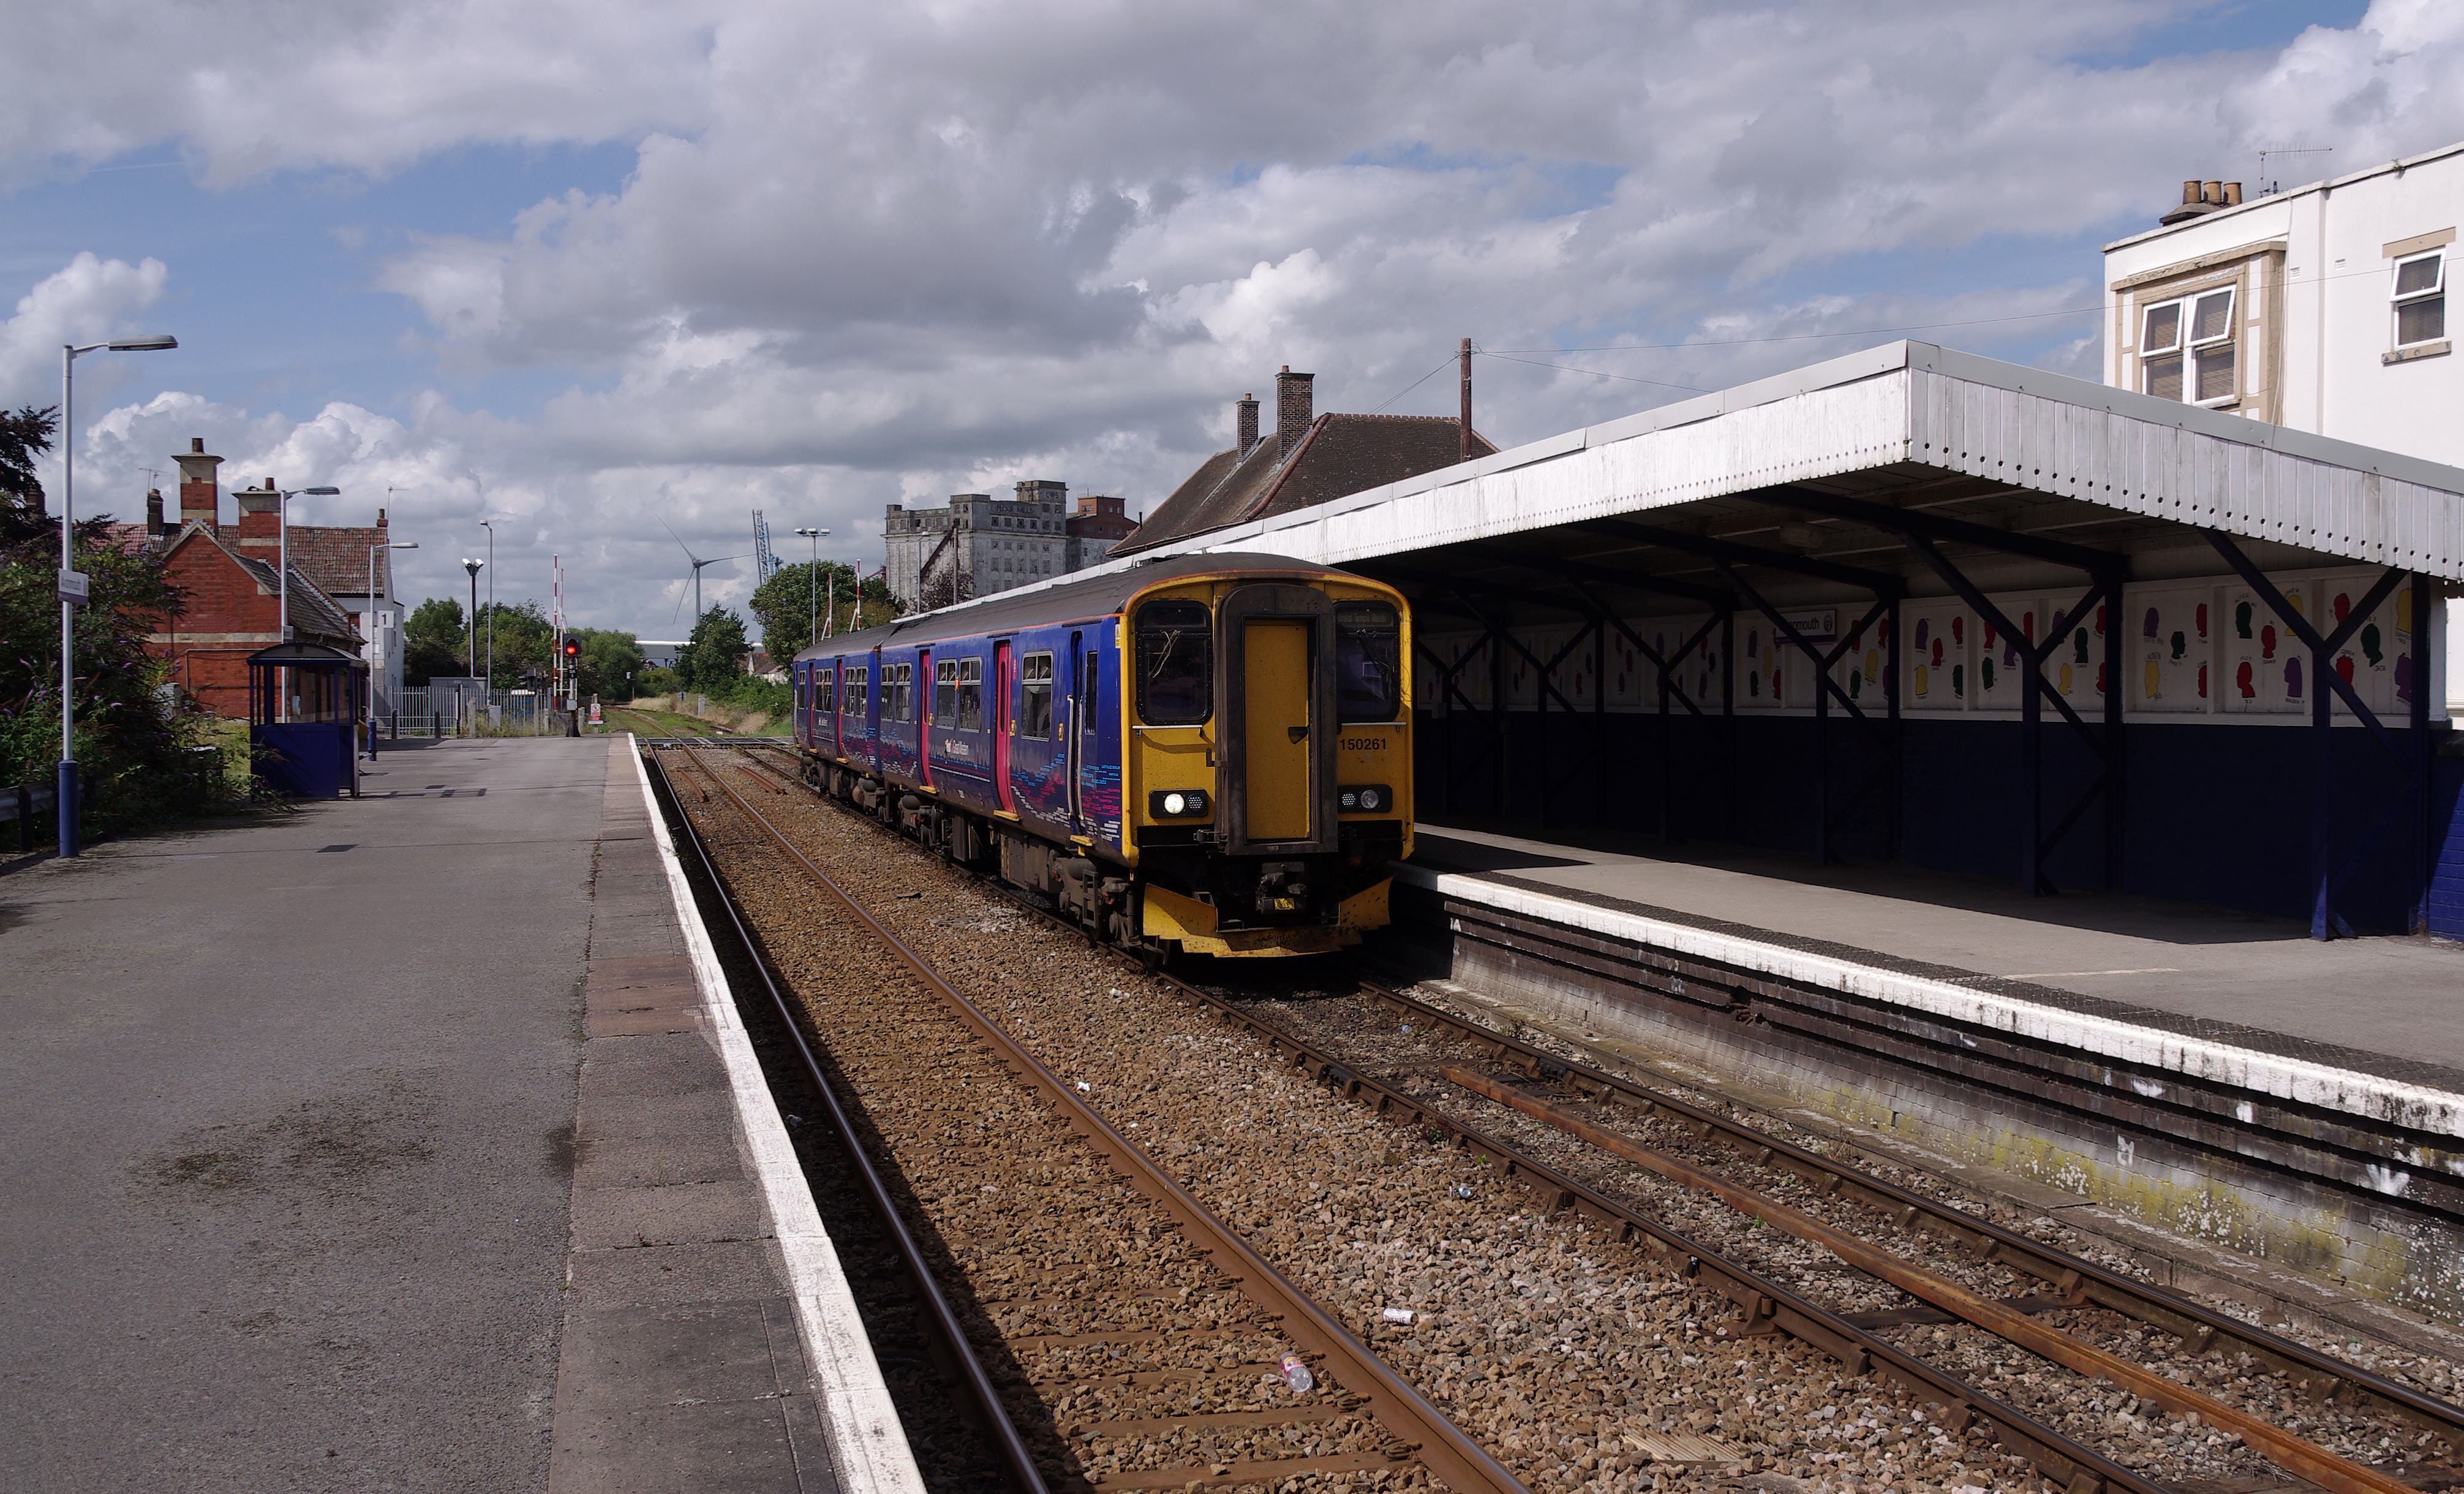 Avonmouth railway station MMB 23 150261